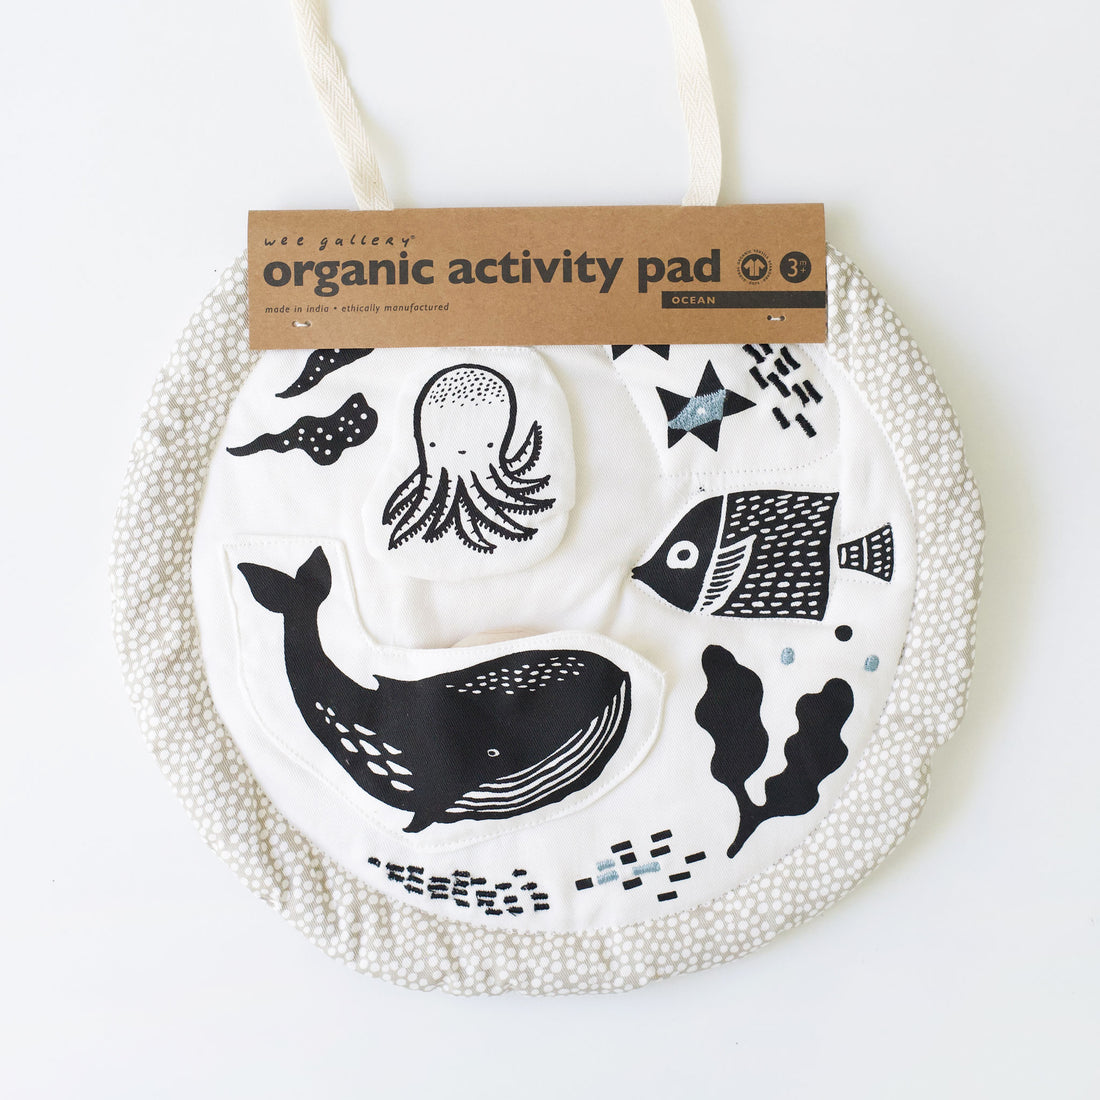 Organic Activity Pad - Ocean